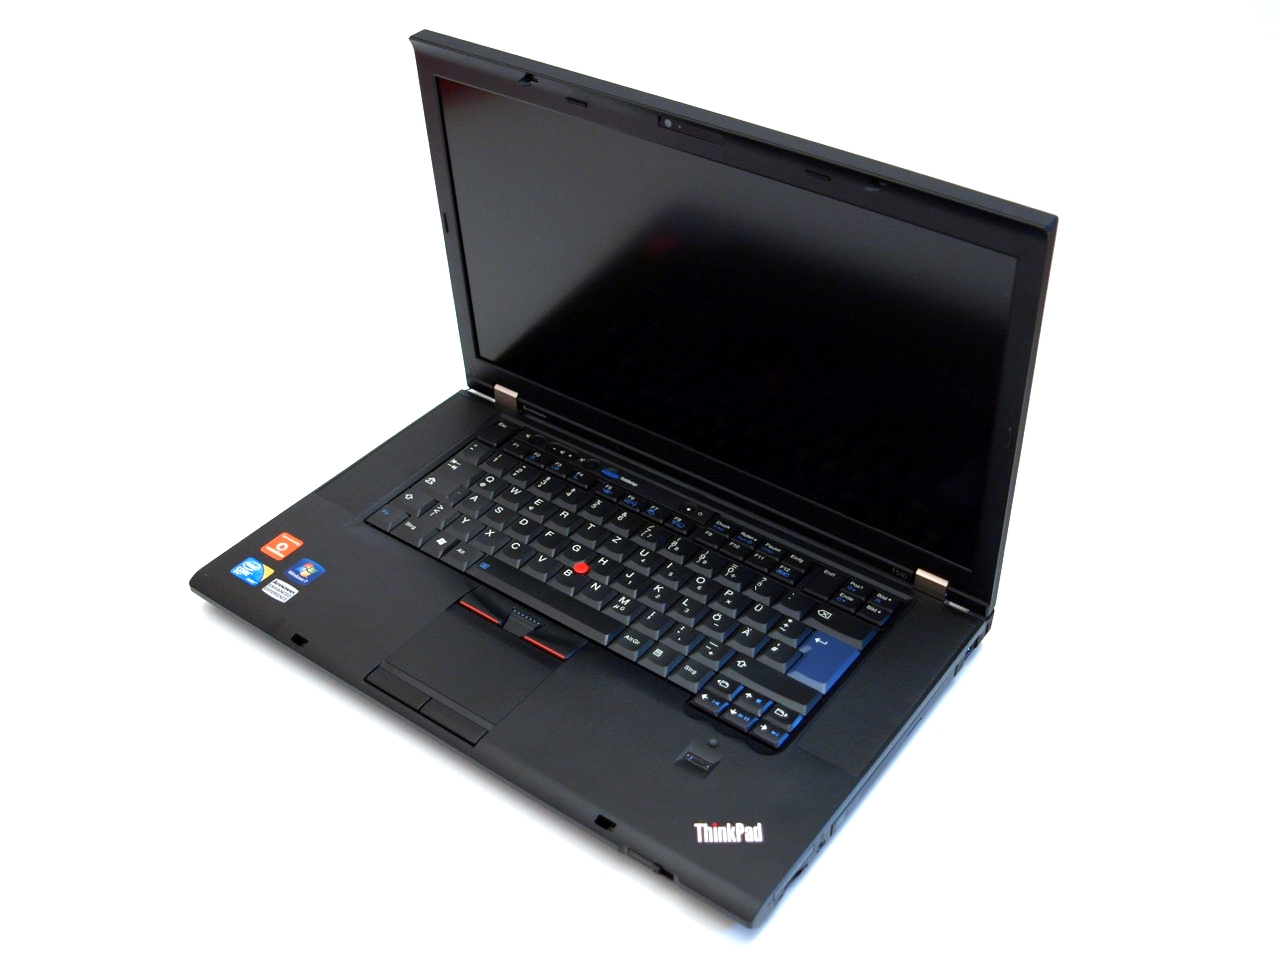 Lenovo Thinkpad T510 4349-4JG - Notebookcheck.net External Reviews